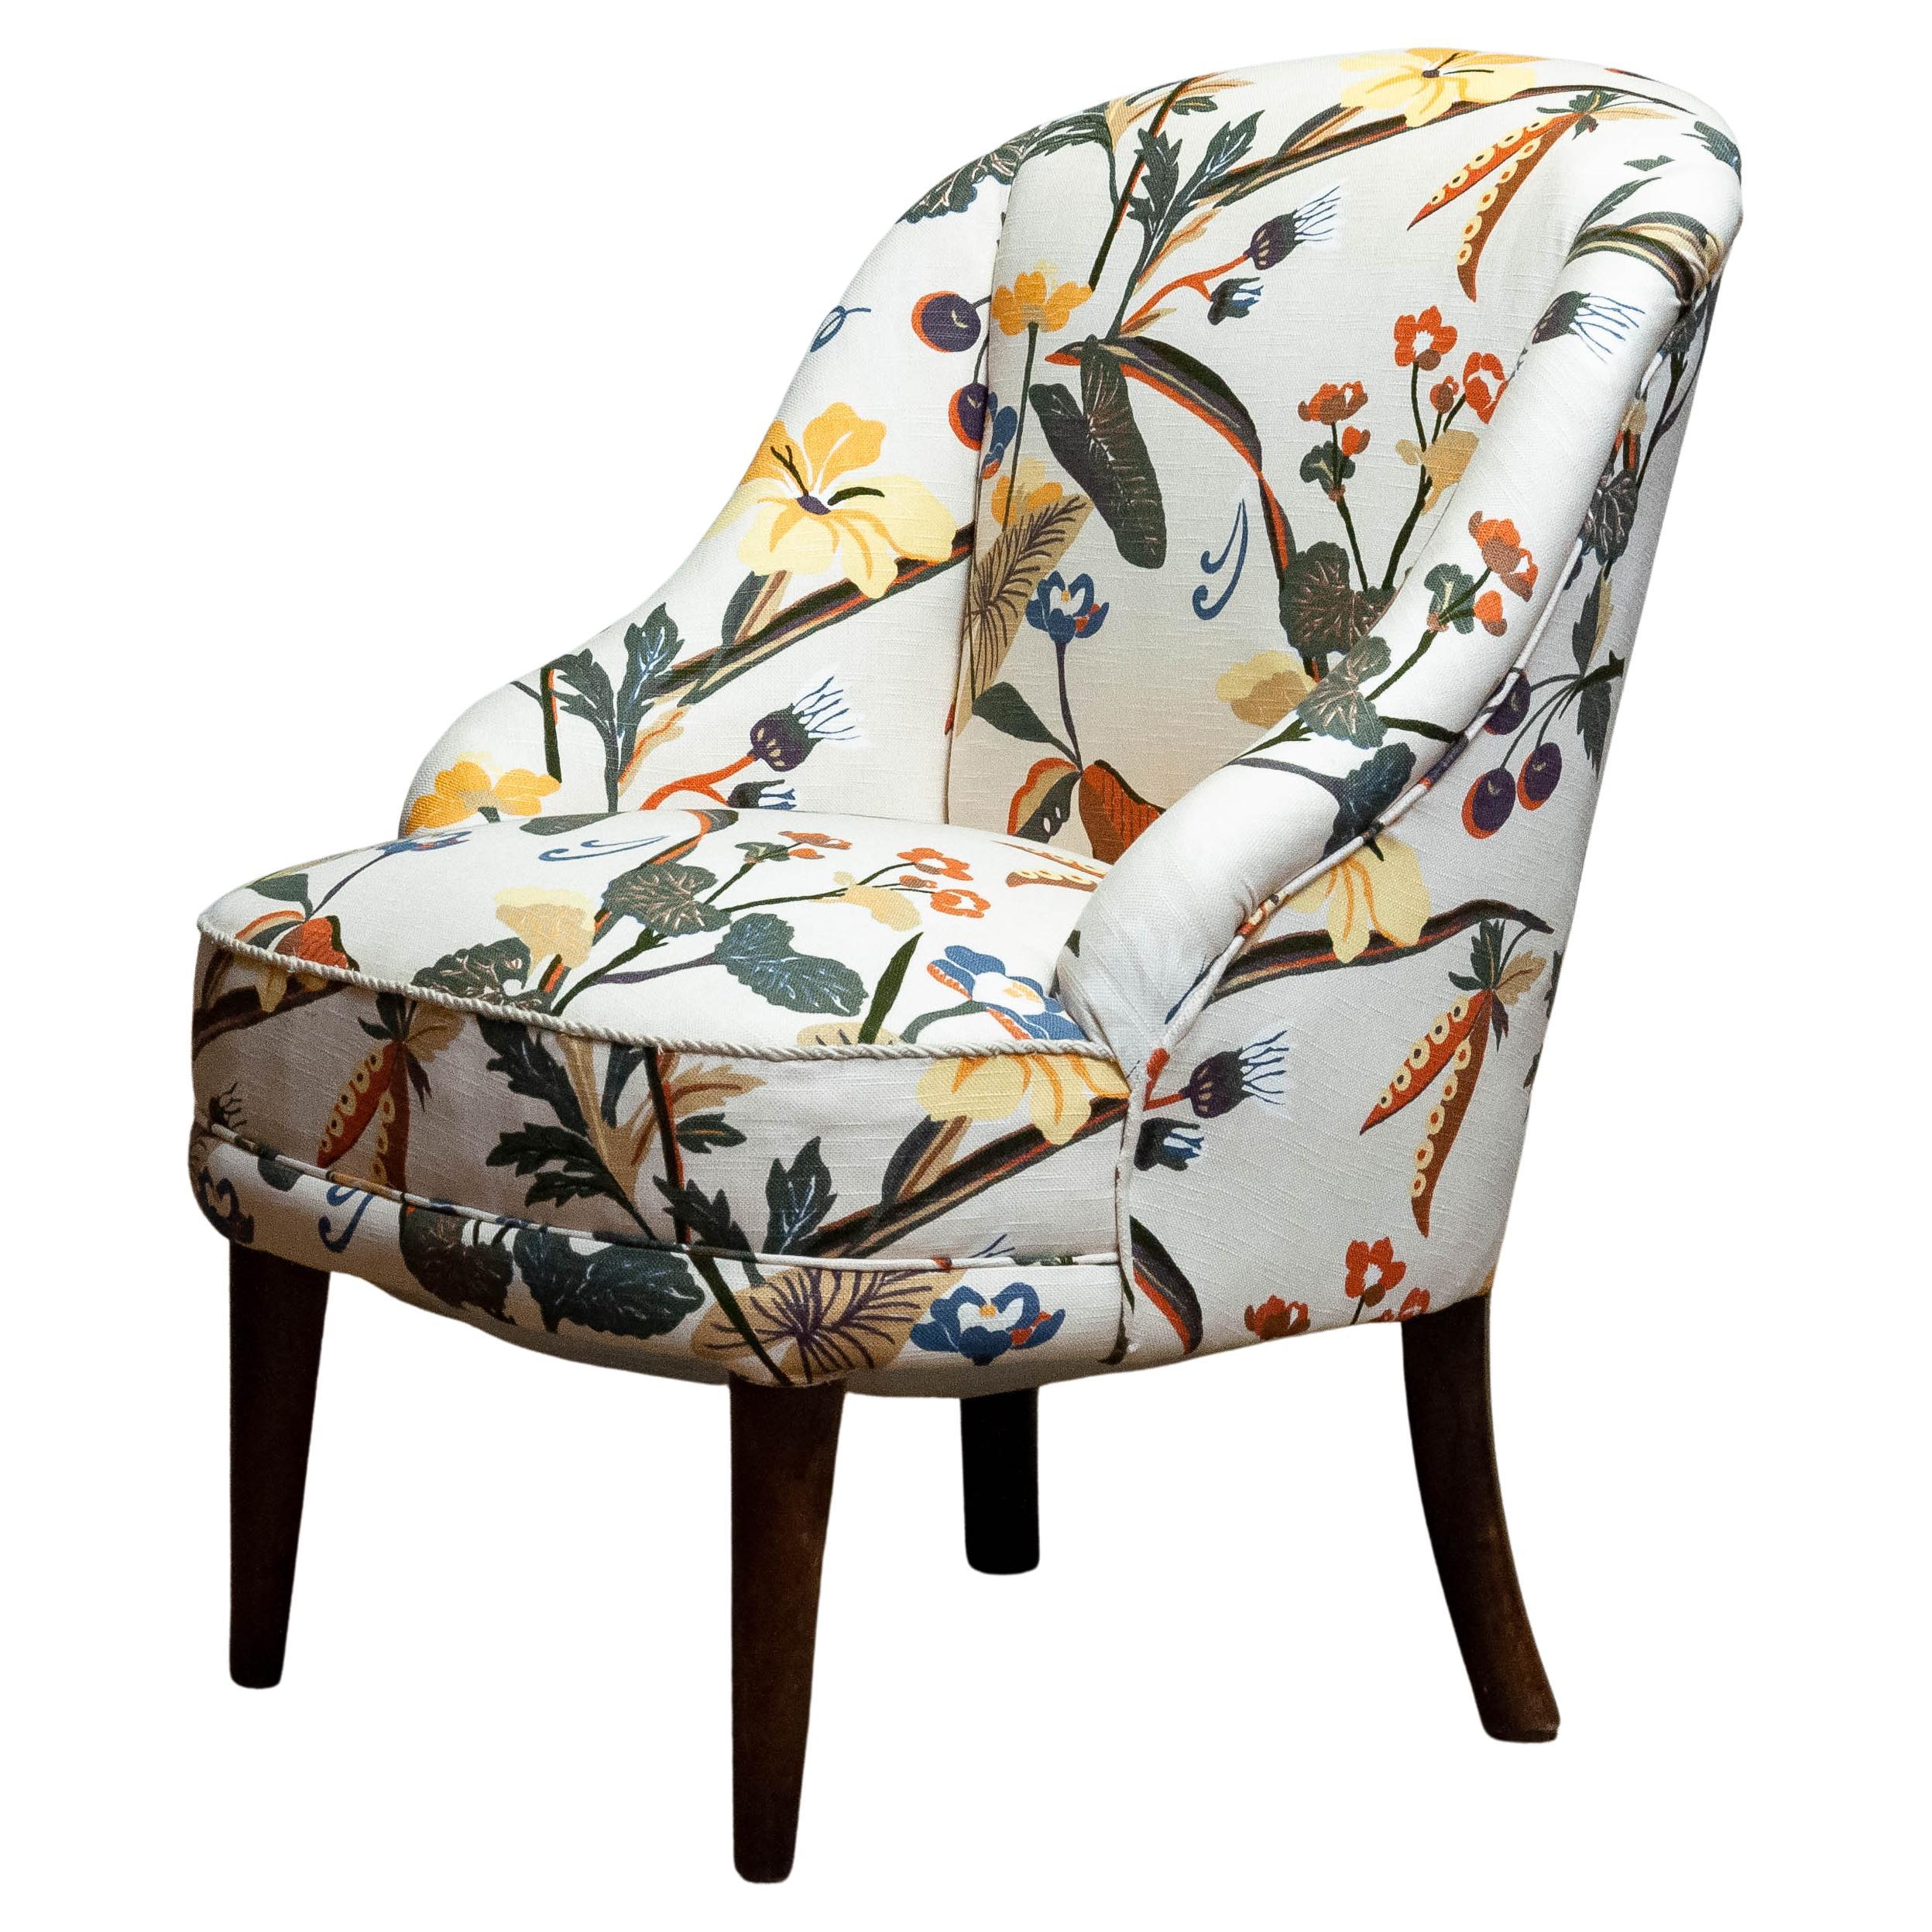 1940s Floral Printed Linen, J. Frank Style, New Upholstered Danish Slipper Chair